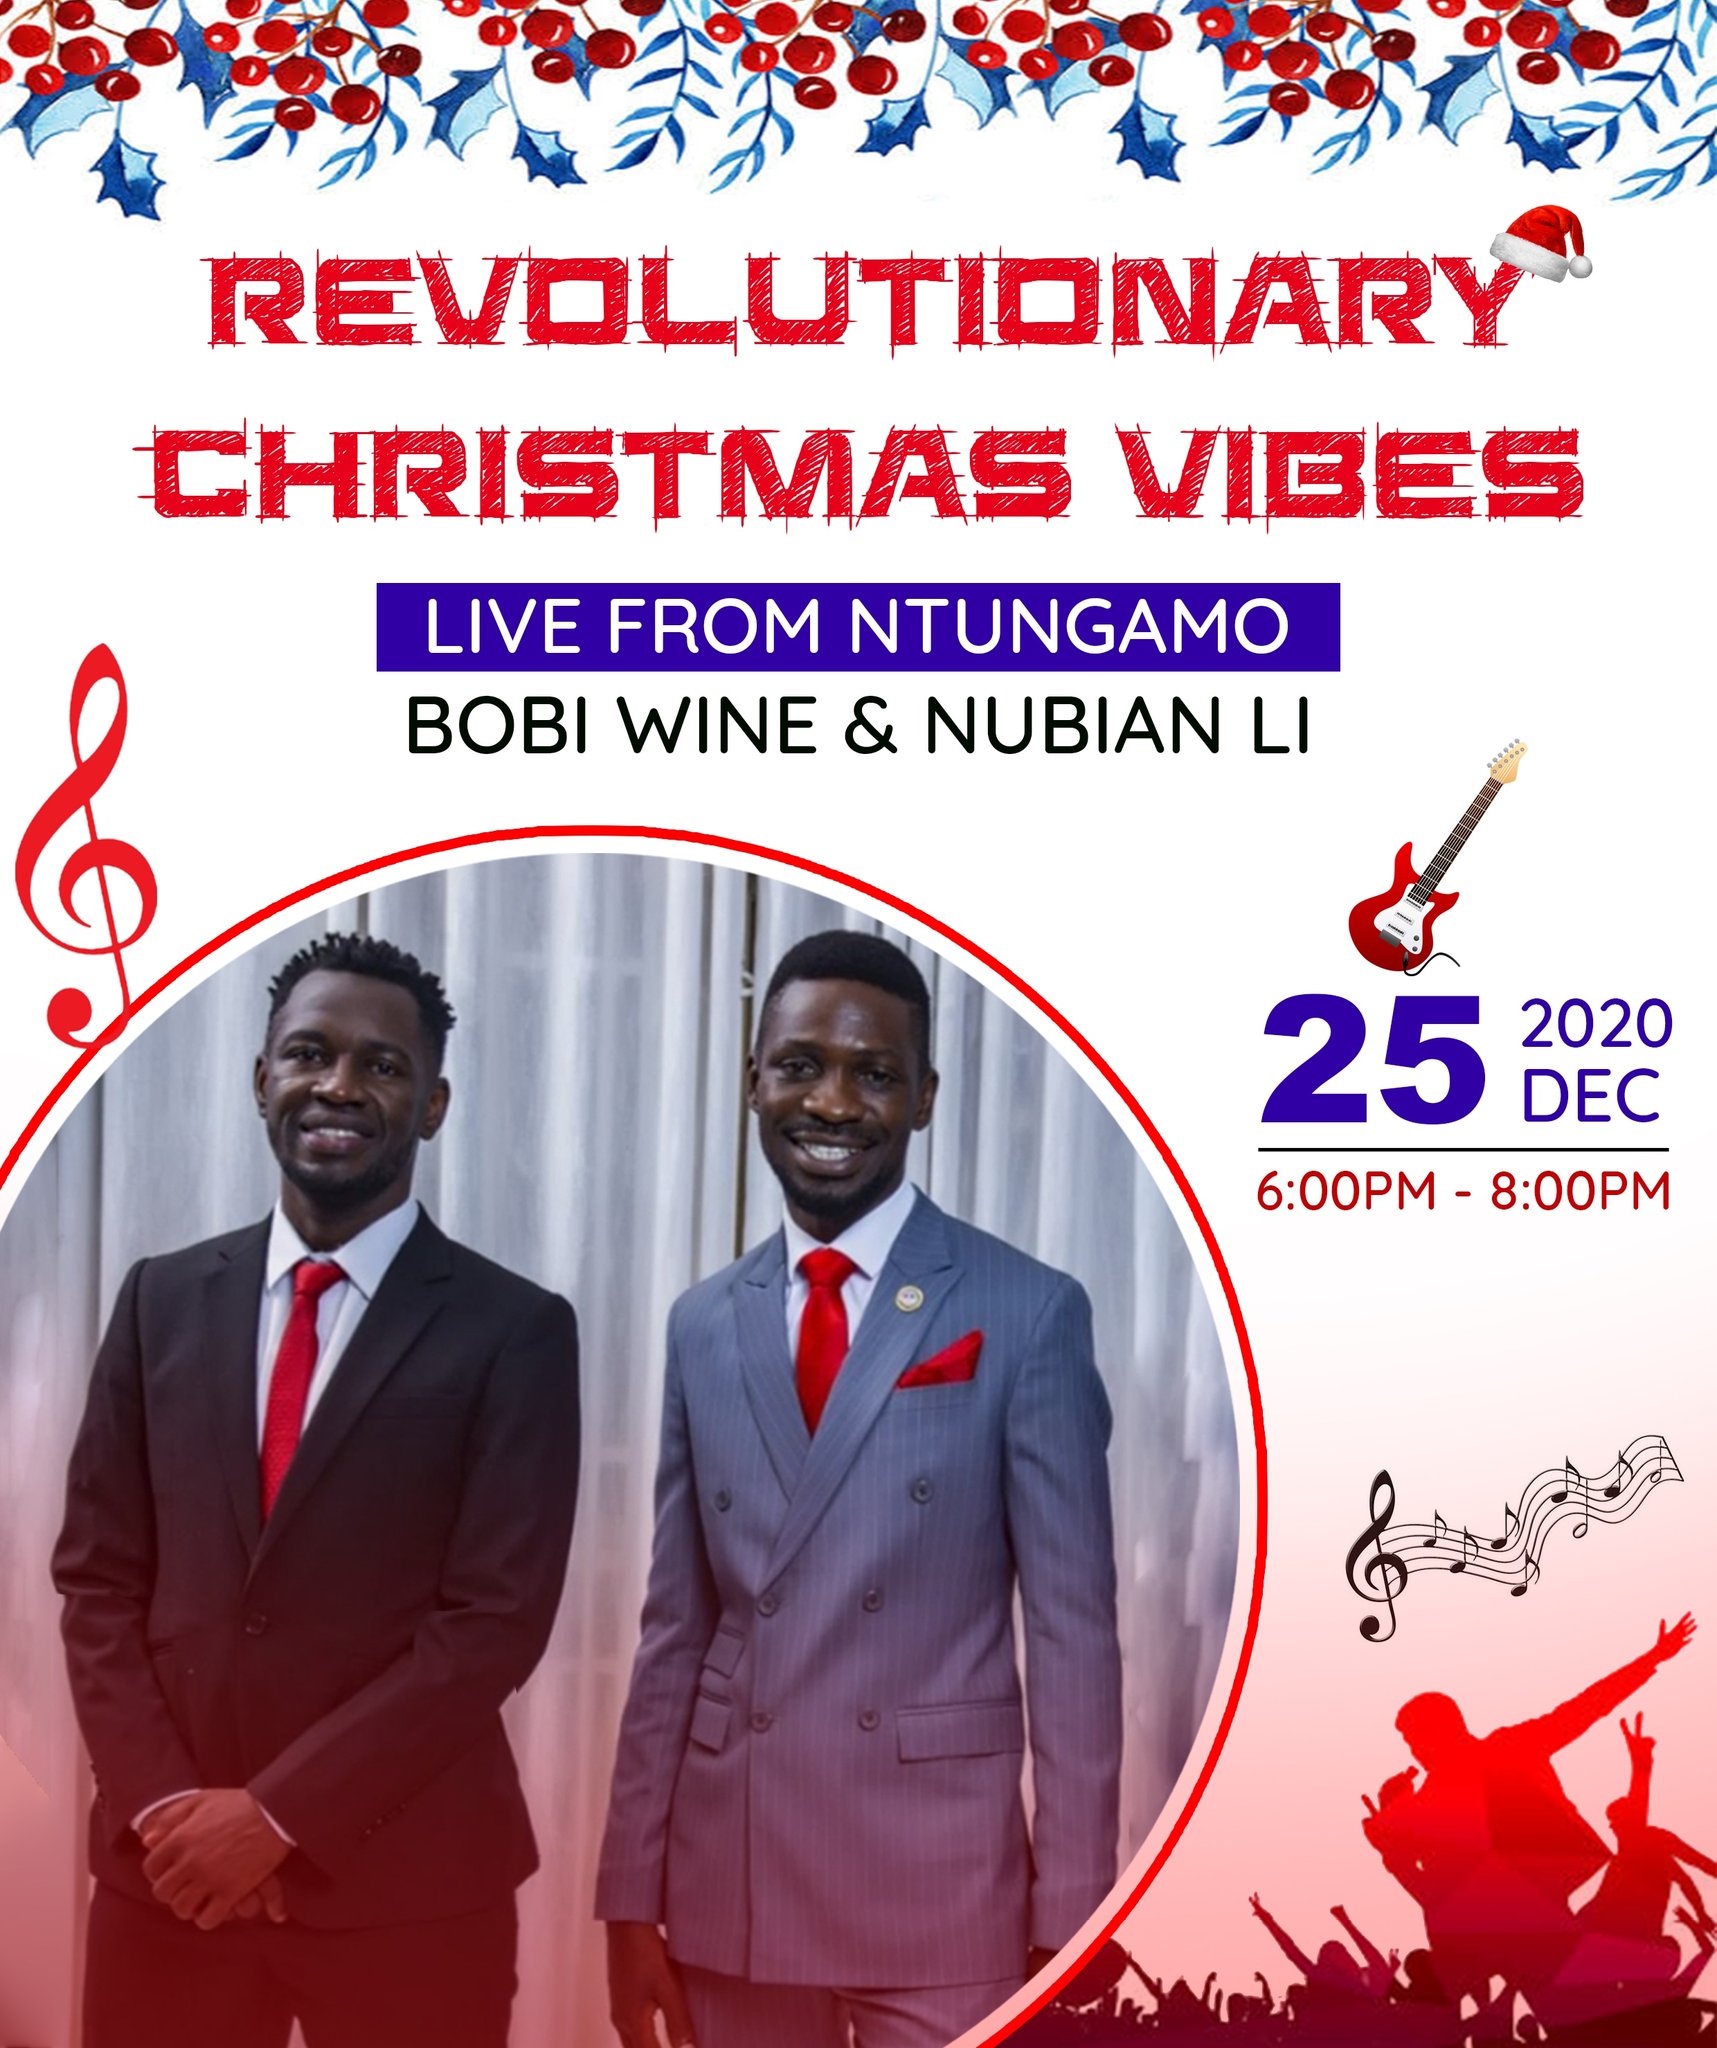 Bobi Wine to hold revolutionary concert